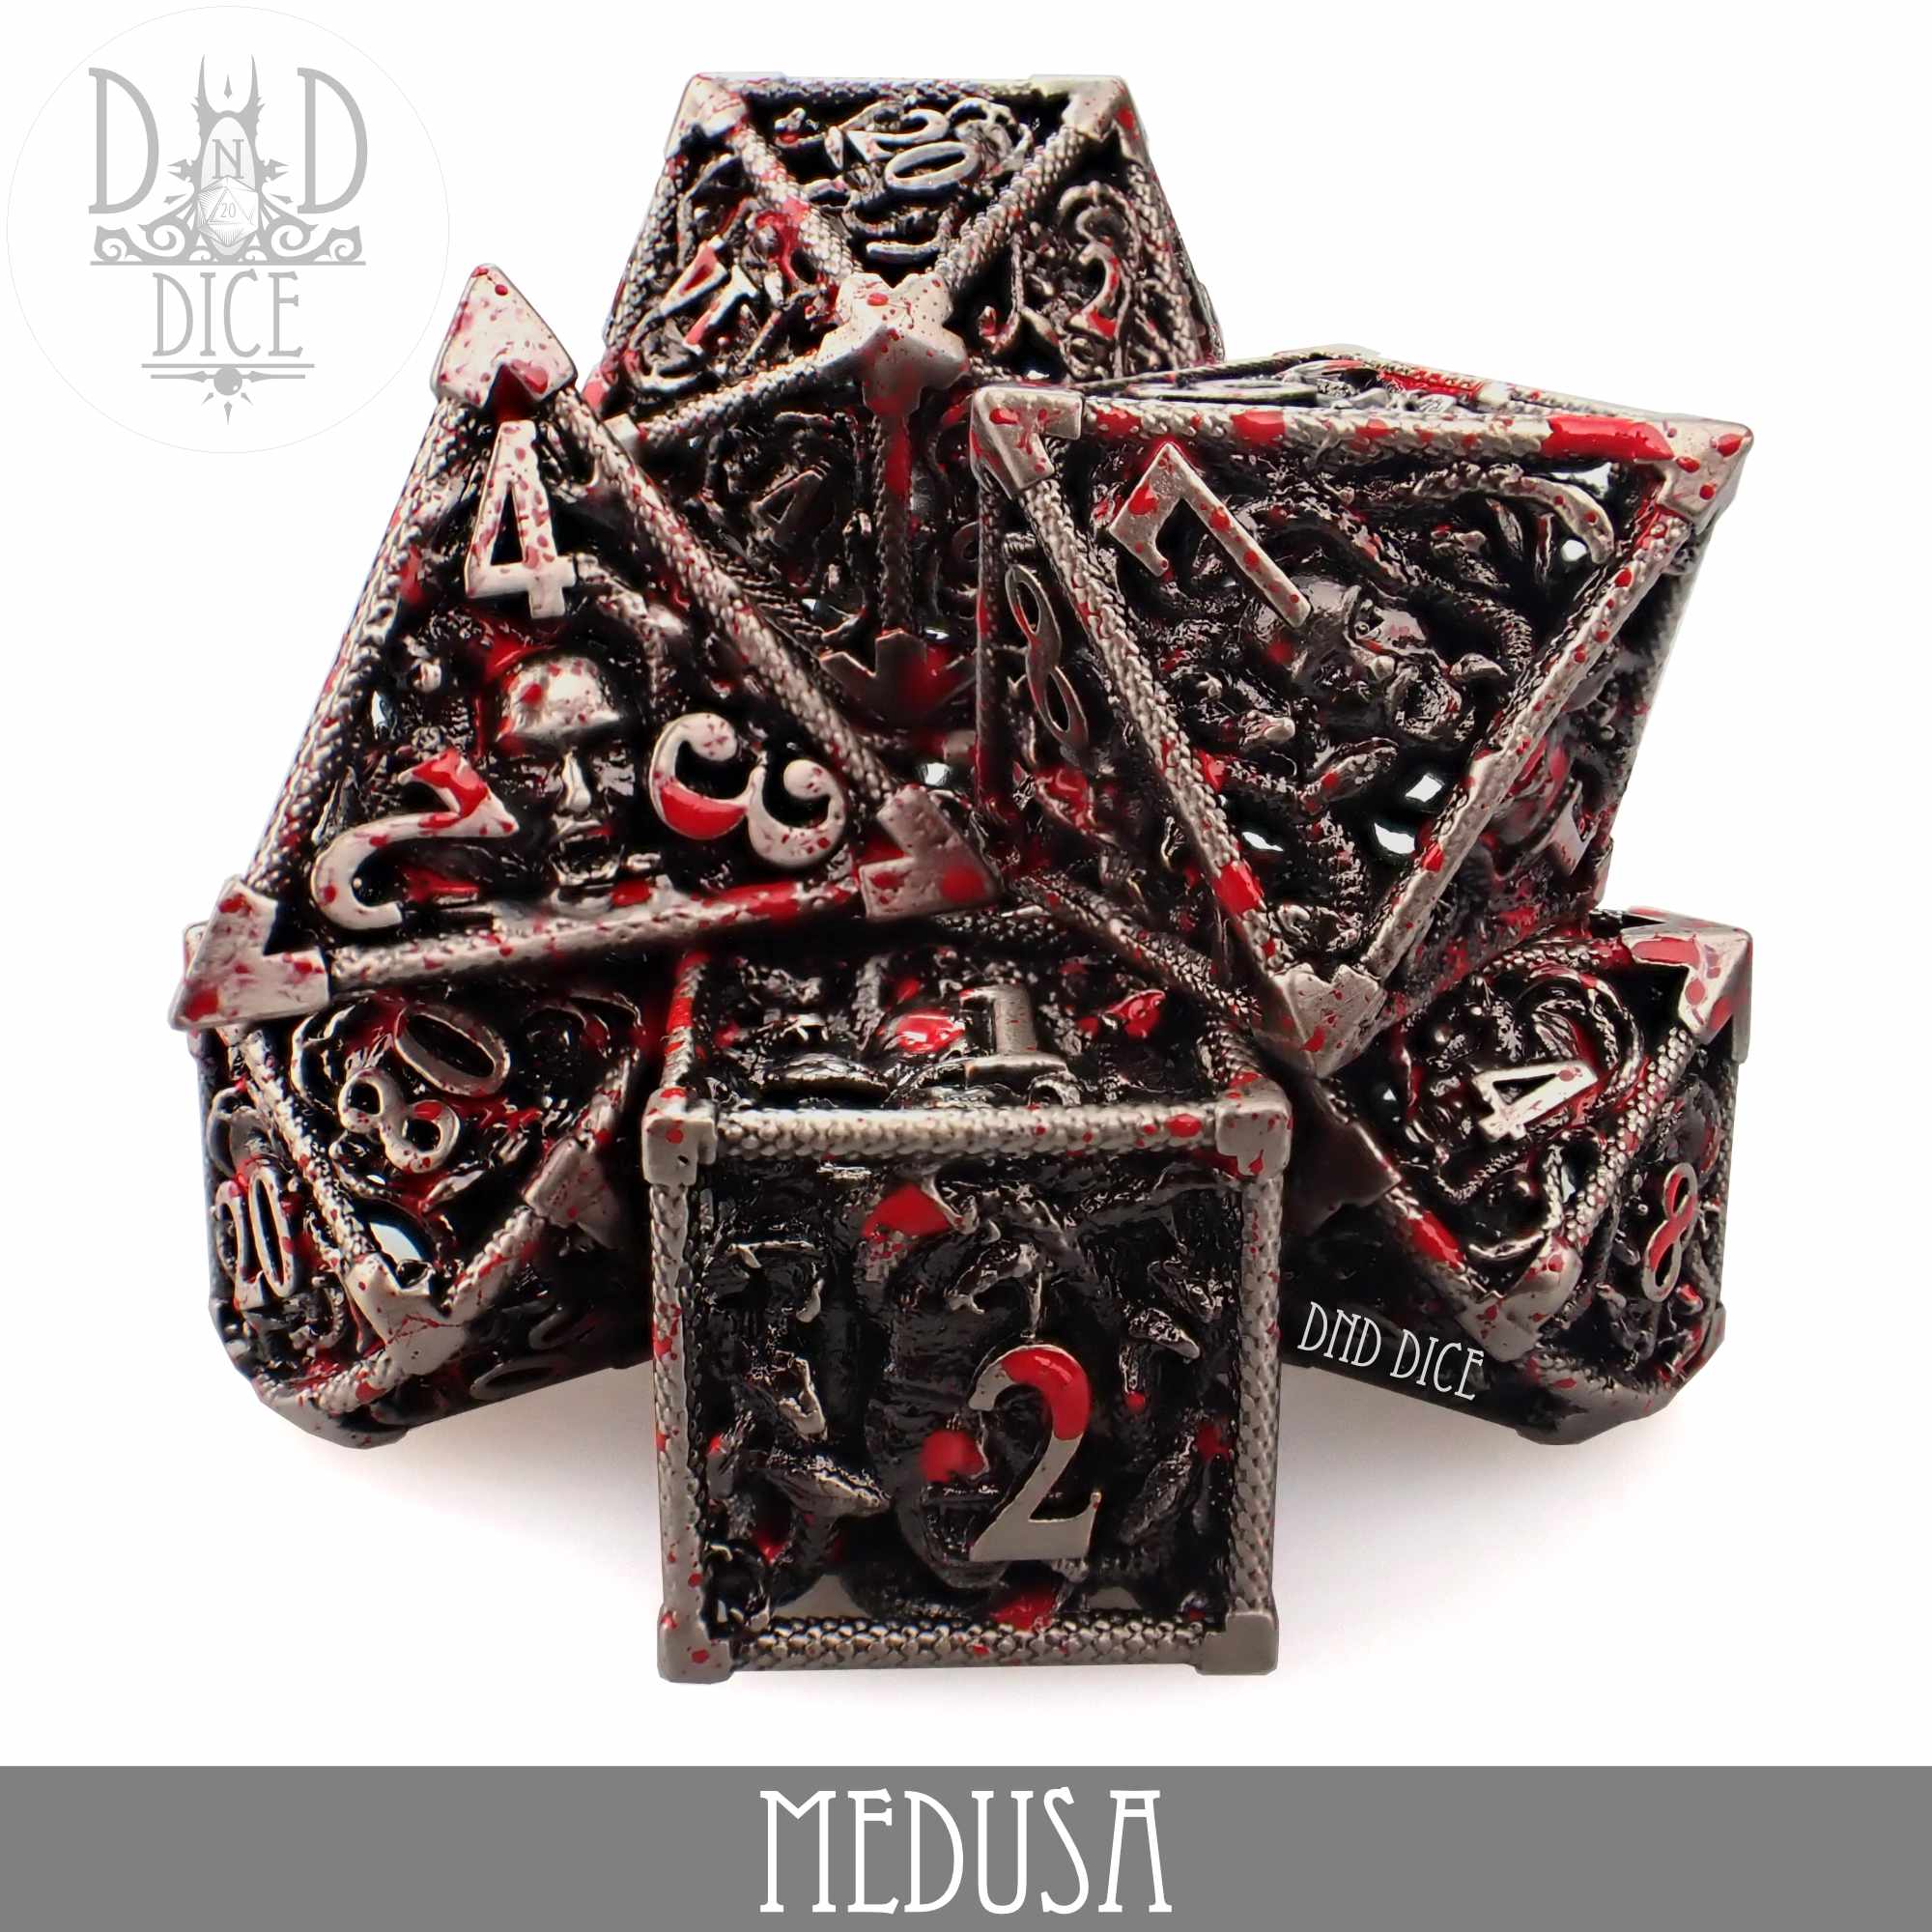 Medusa Metal Dice Set (Gift Box)